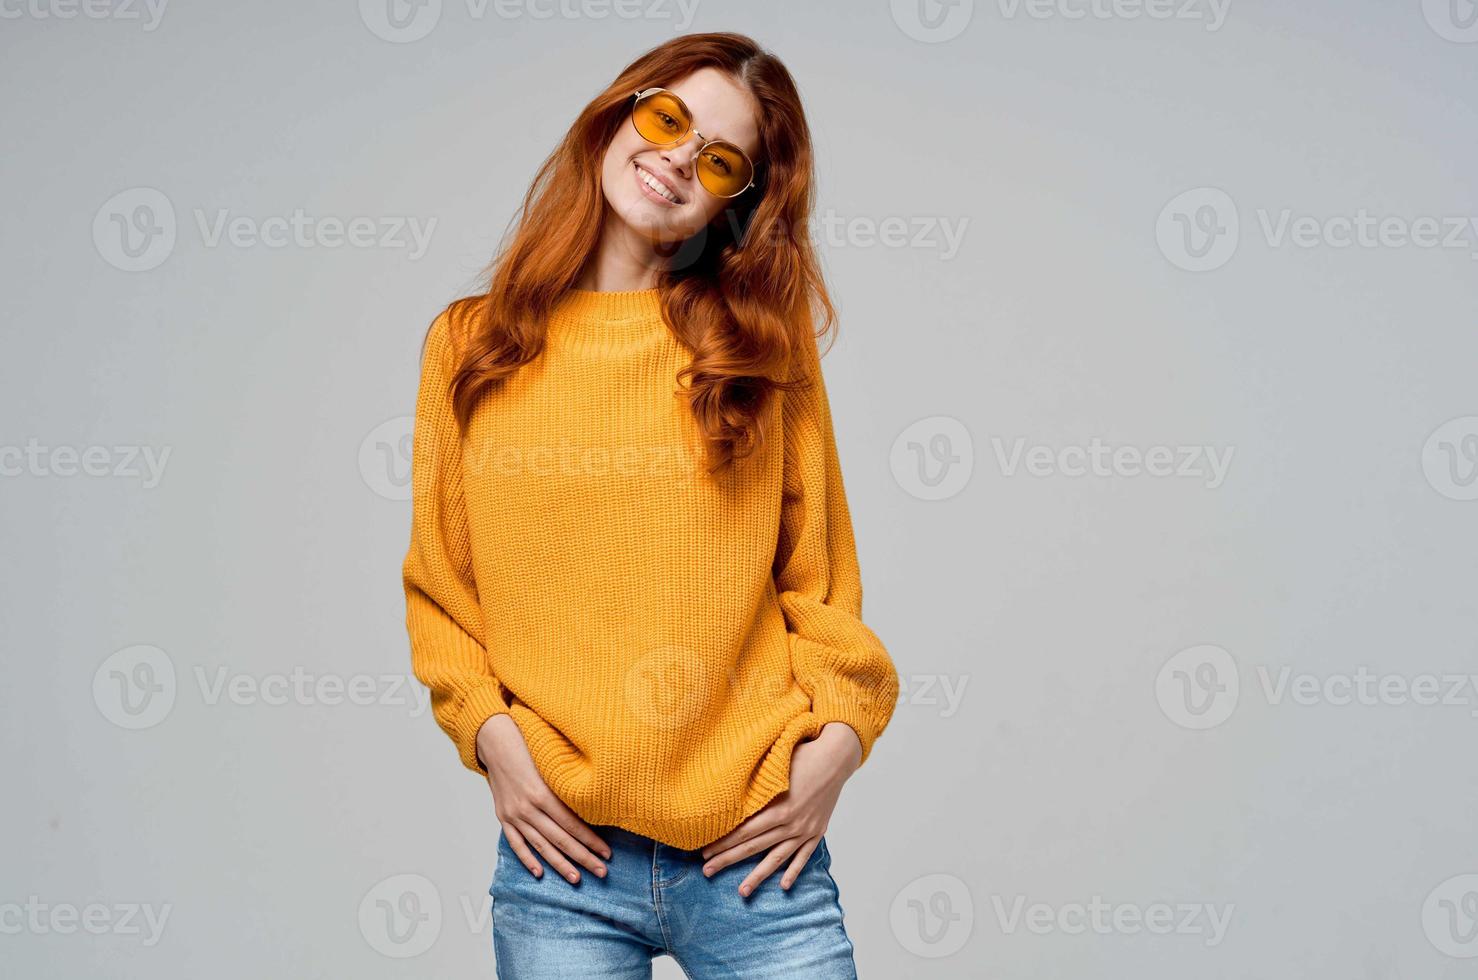 Pelirrojo mujer en amarillo lentes posando divertido estilo de vida estudio modelo foto